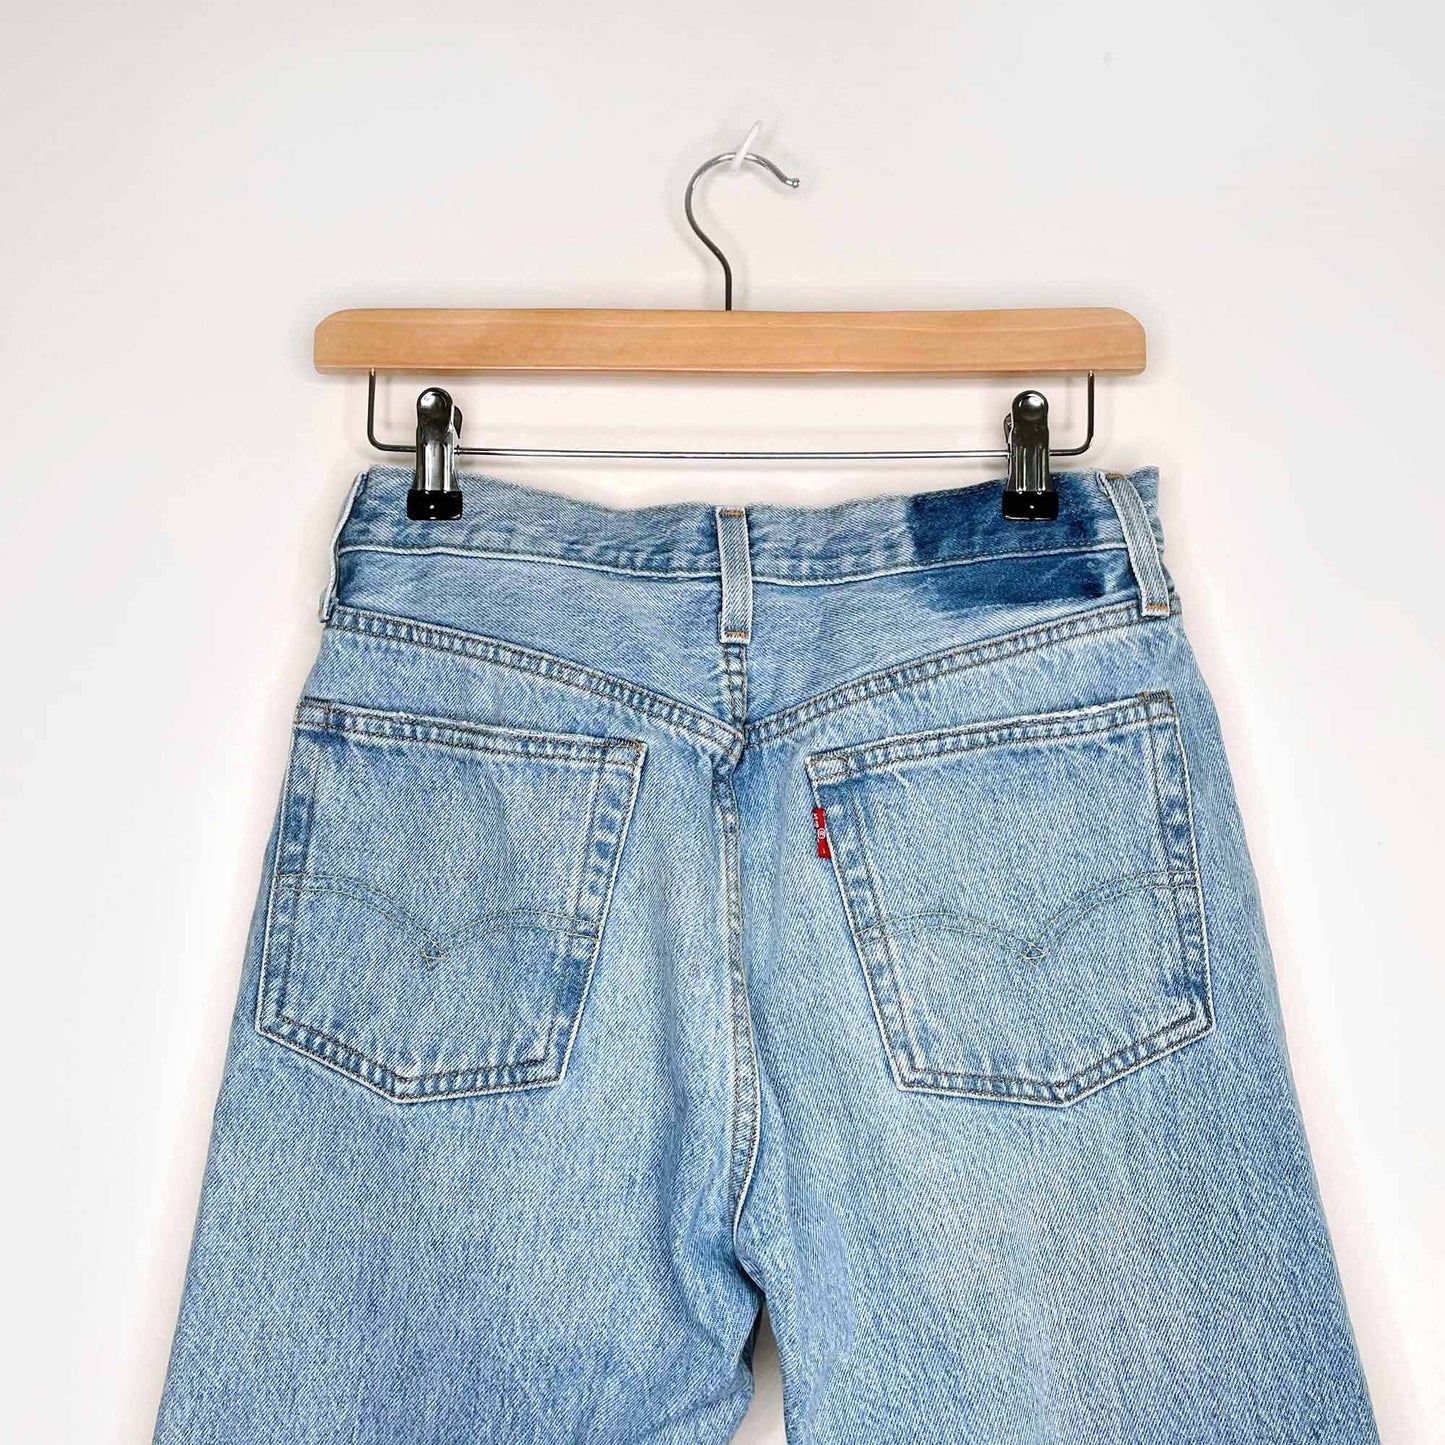 Levi's 501 high rise skinny jeans light wash raw hem - size 27